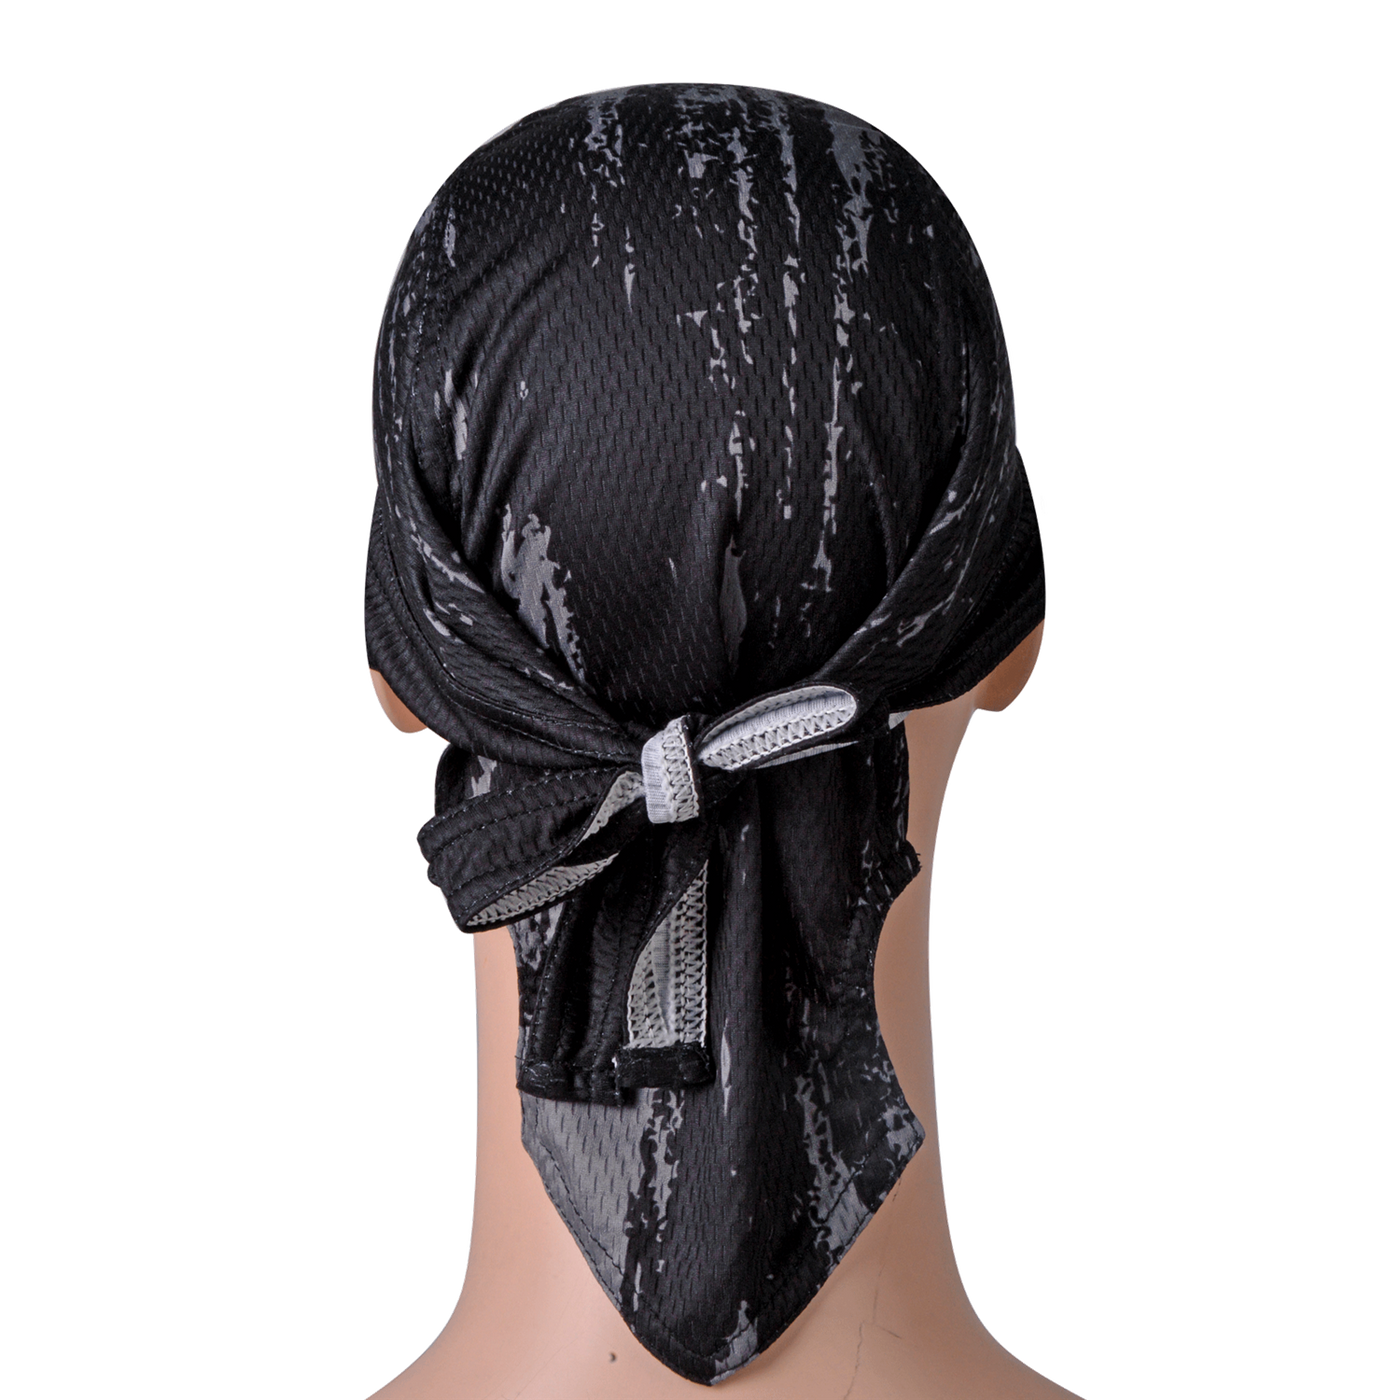 Nuckily PJ16 Printed Pirate Head Scarf Headband Sweat Proof Bandana - Cyclop.in